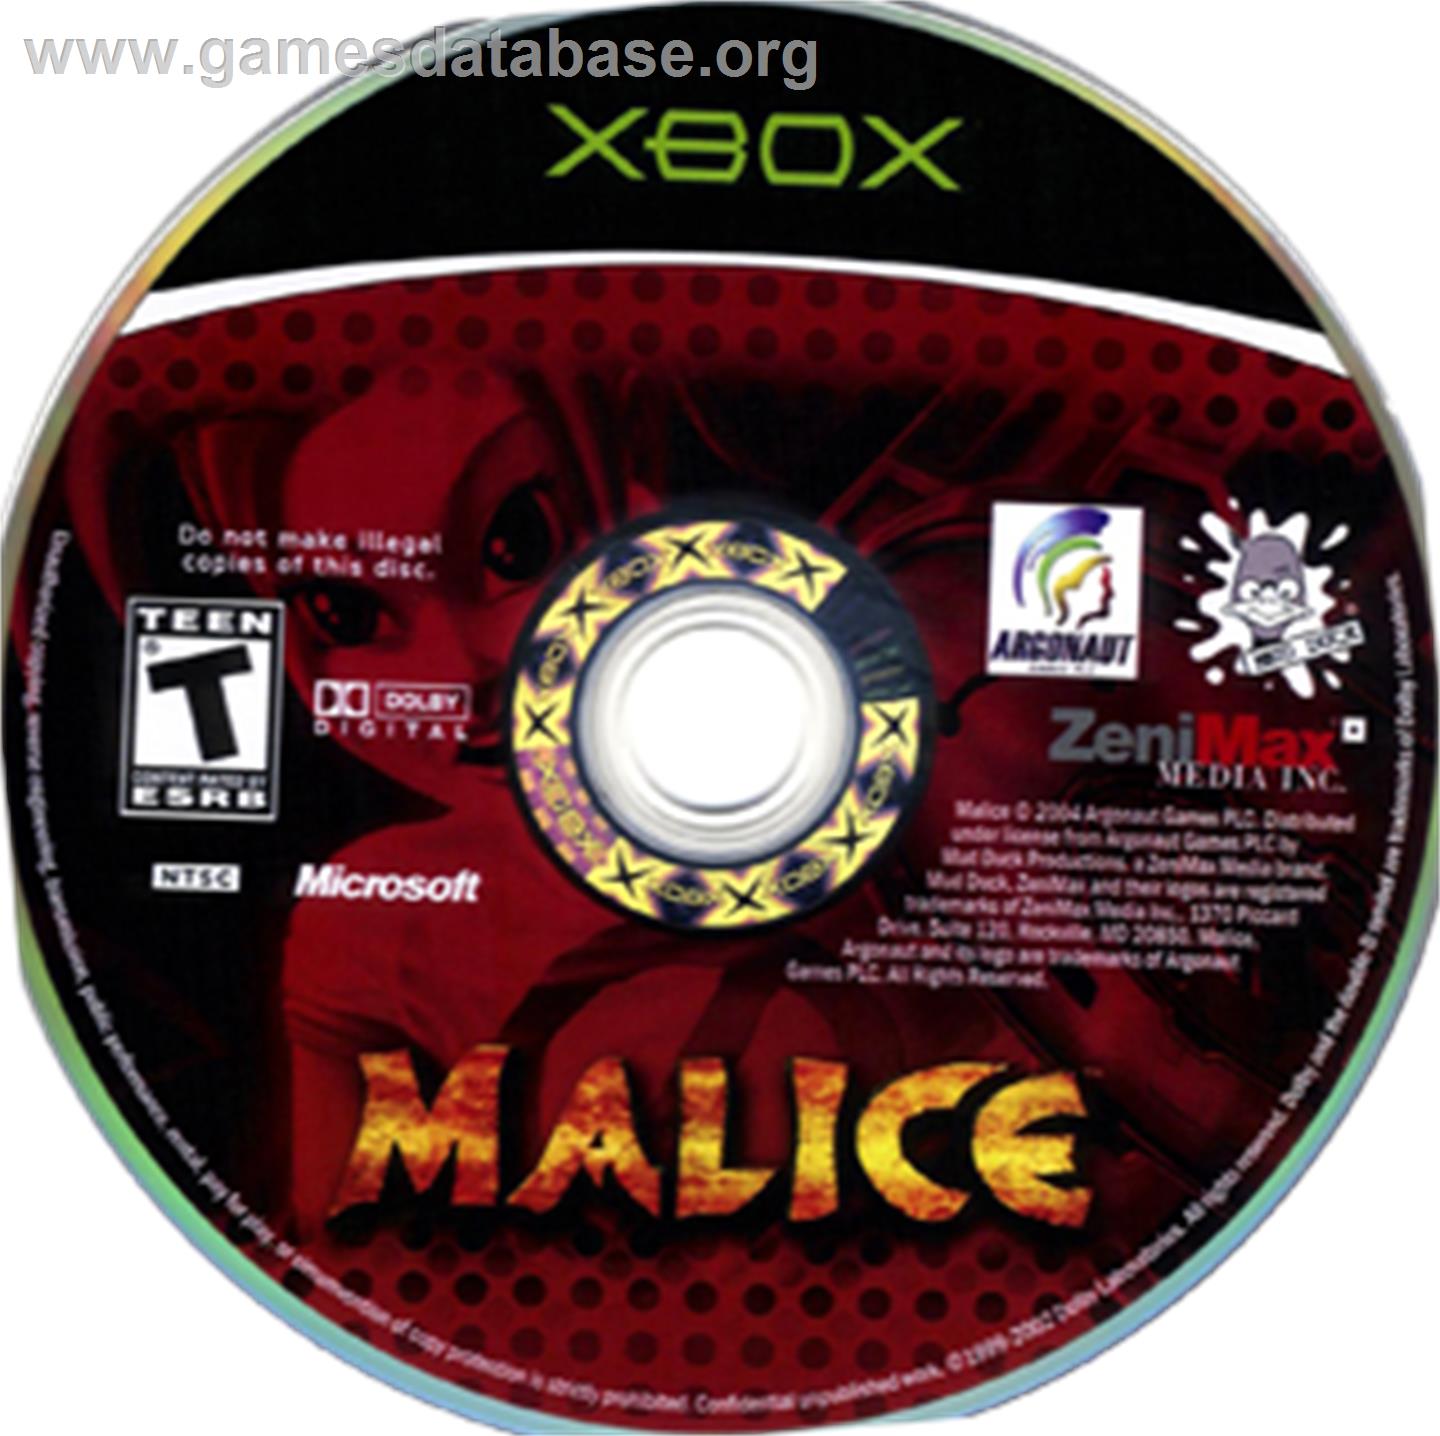 Malice - Microsoft Xbox - Artwork - CD